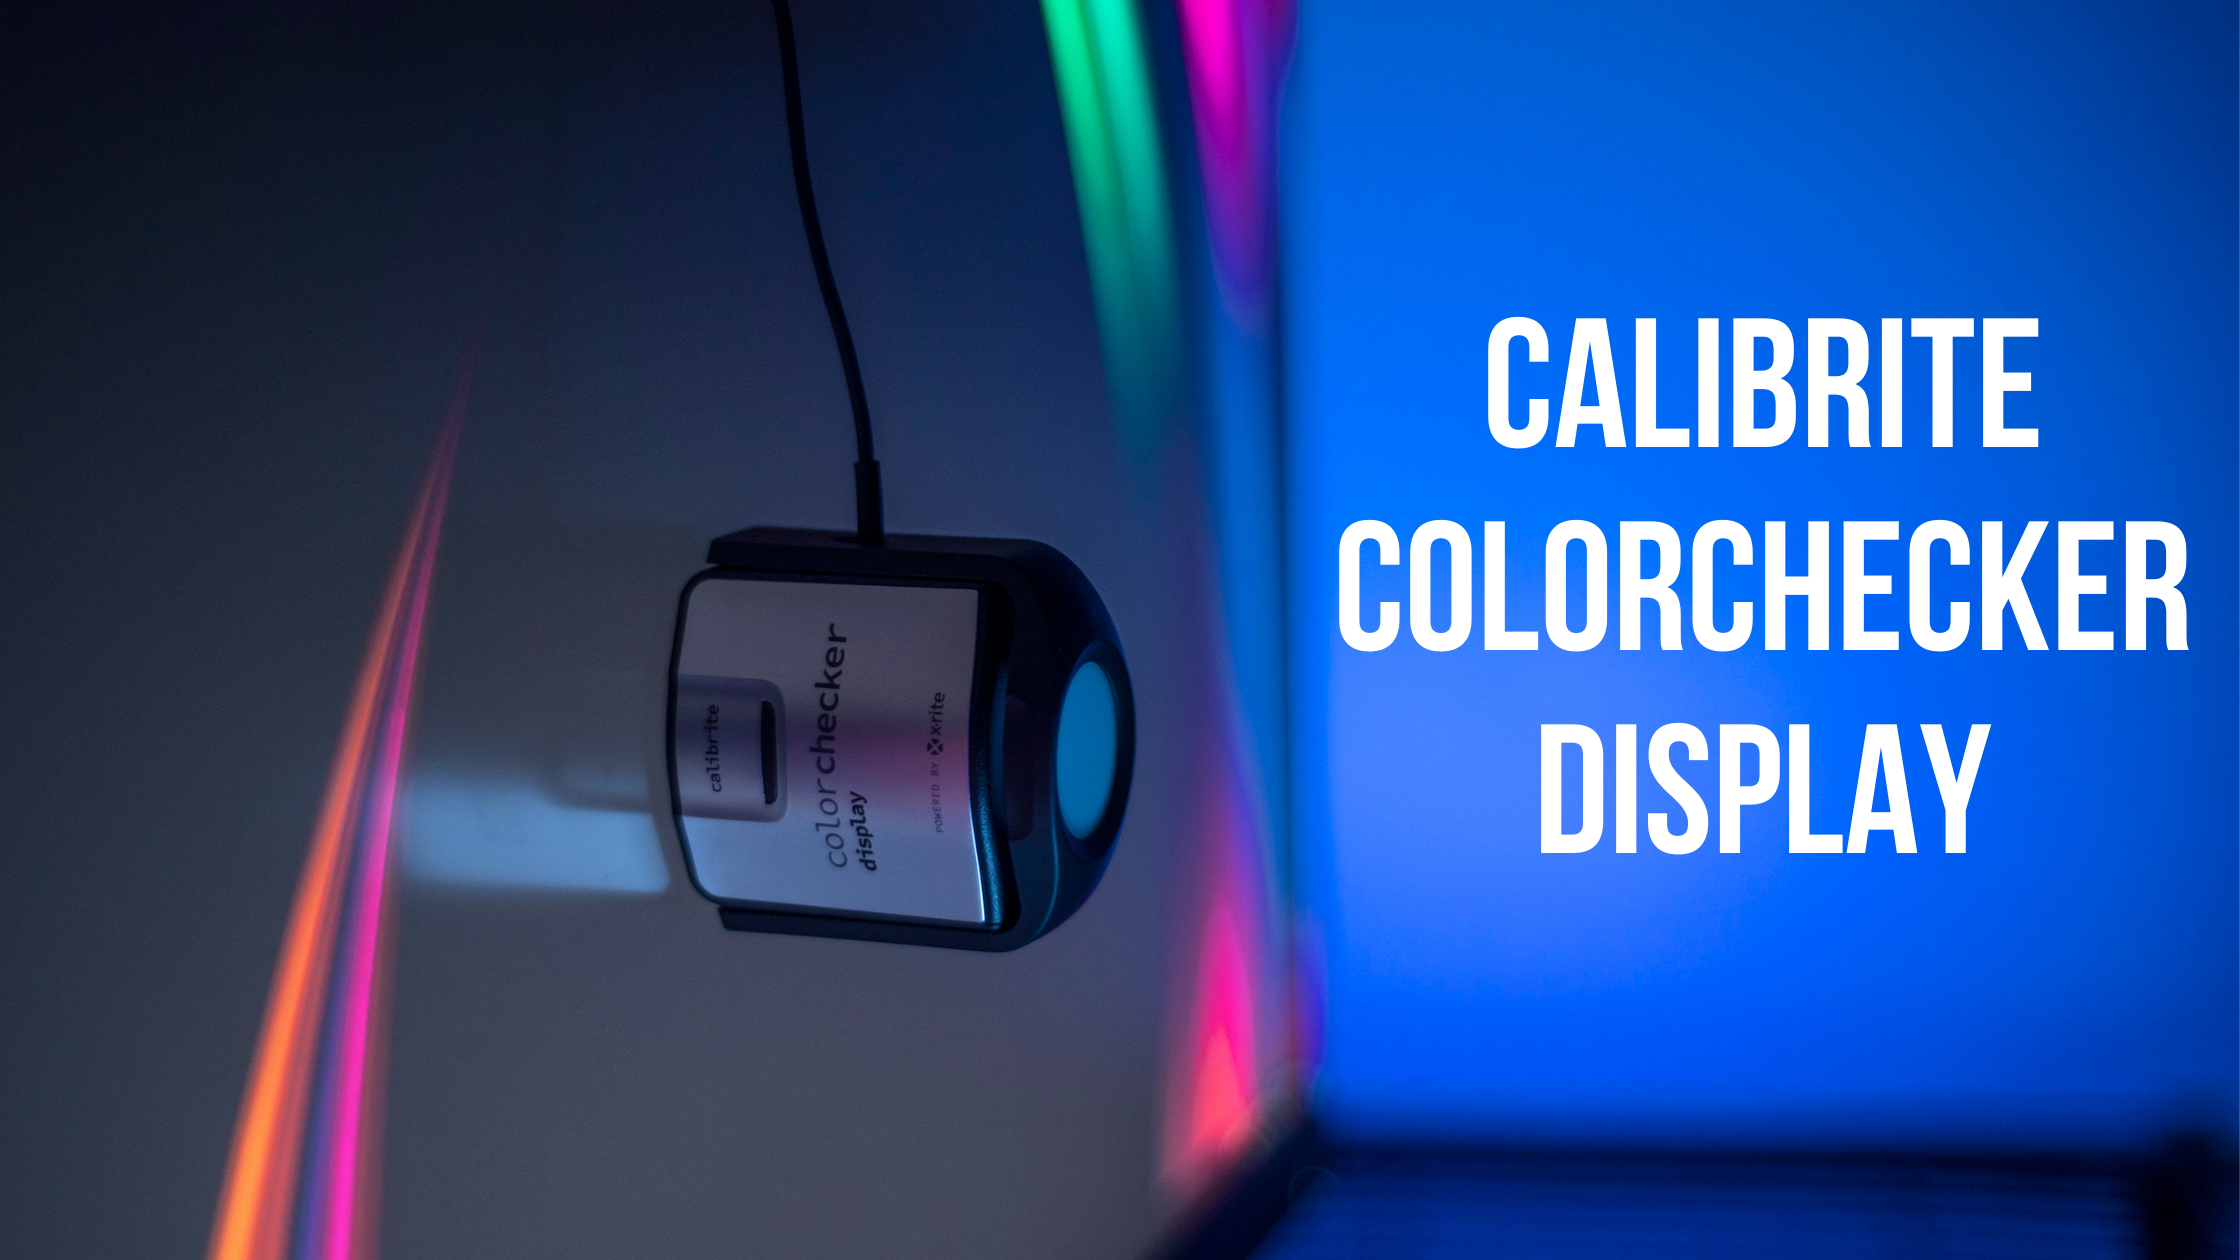 Reviewing the Calibrite ColorChecker Display